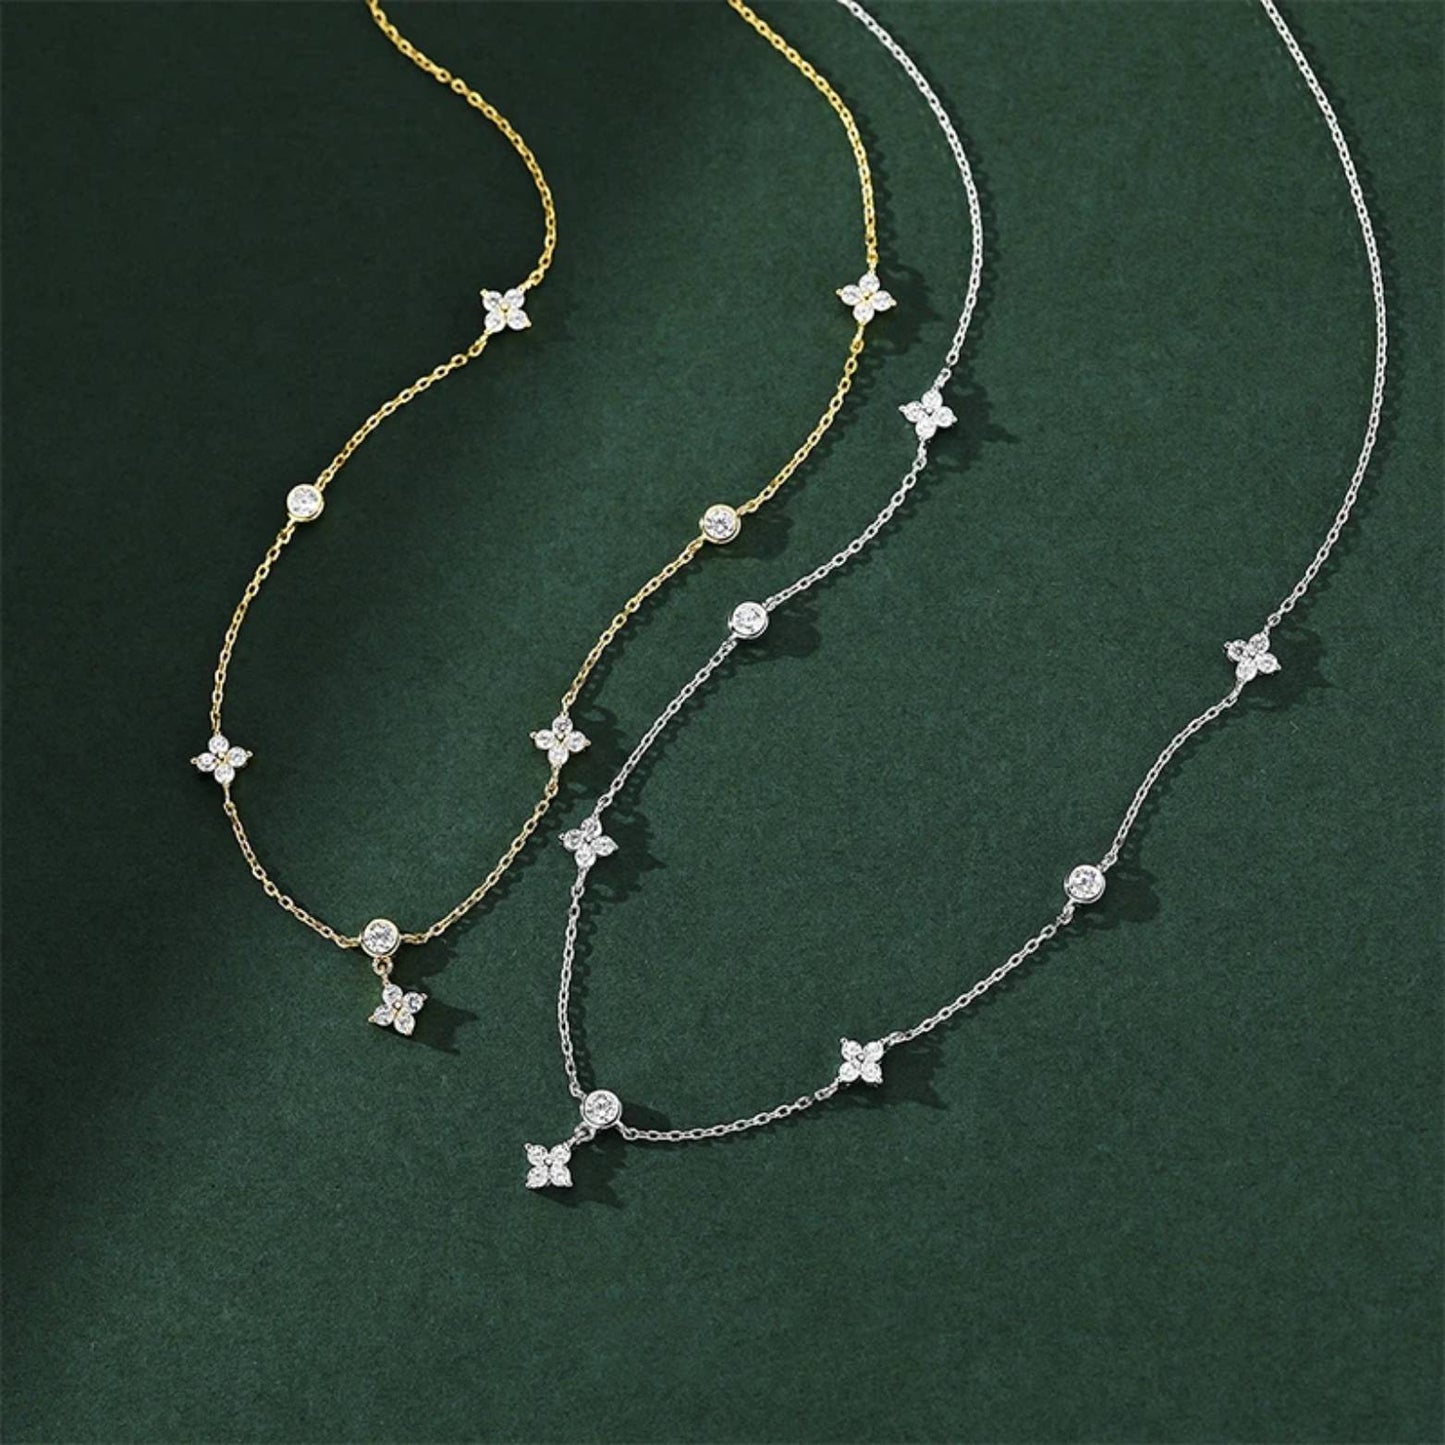 Four Leaf Clover Moissanite Pendant Necklace - S925 Silver Choker